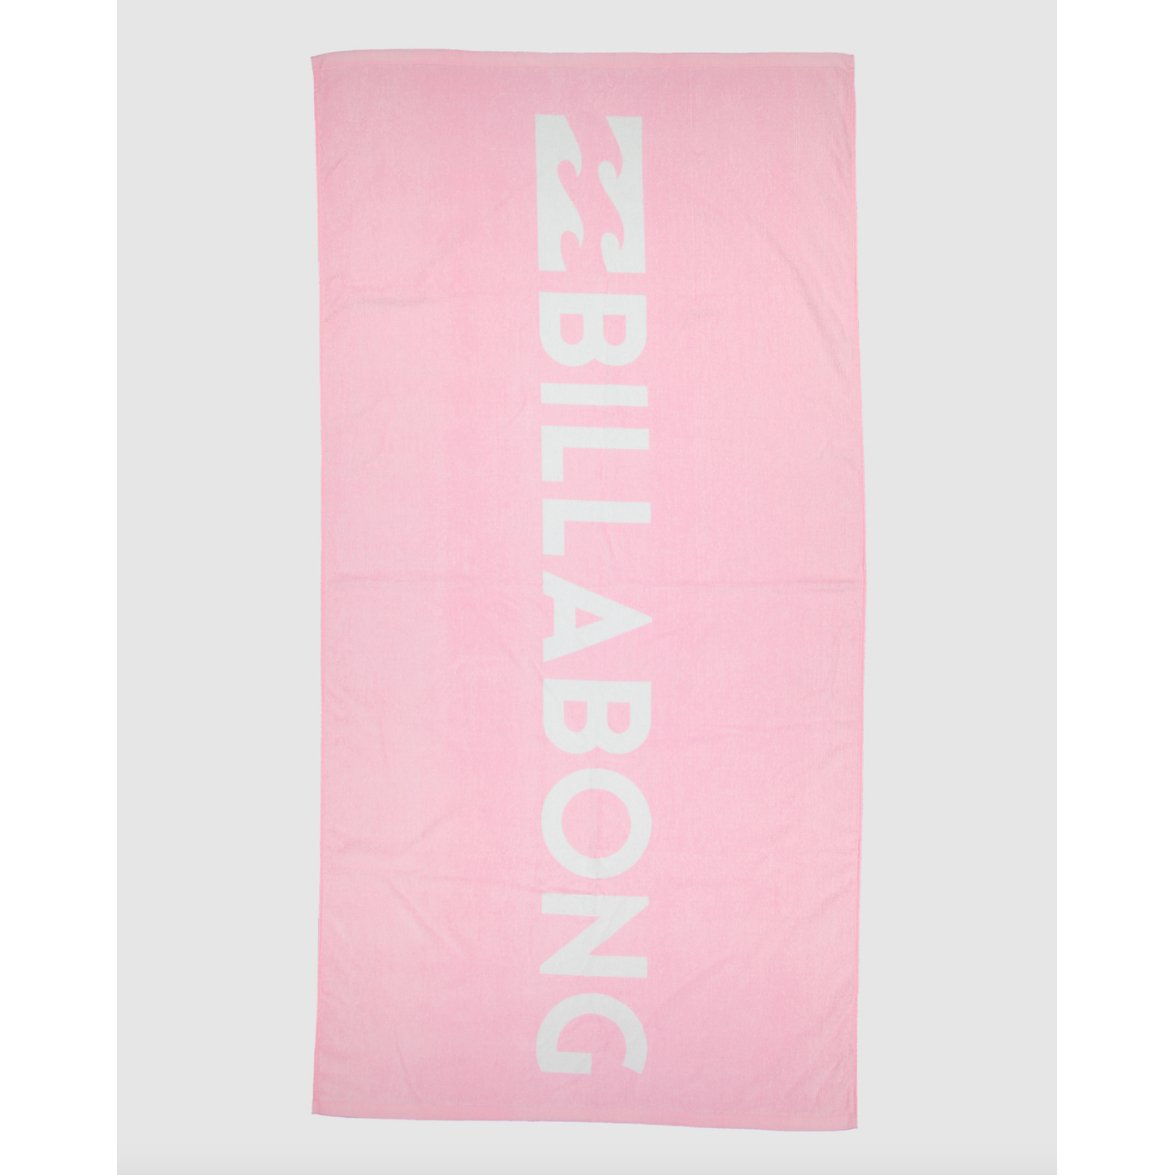 Billabong - Oasis Towel - Light Pink - Velocity 21